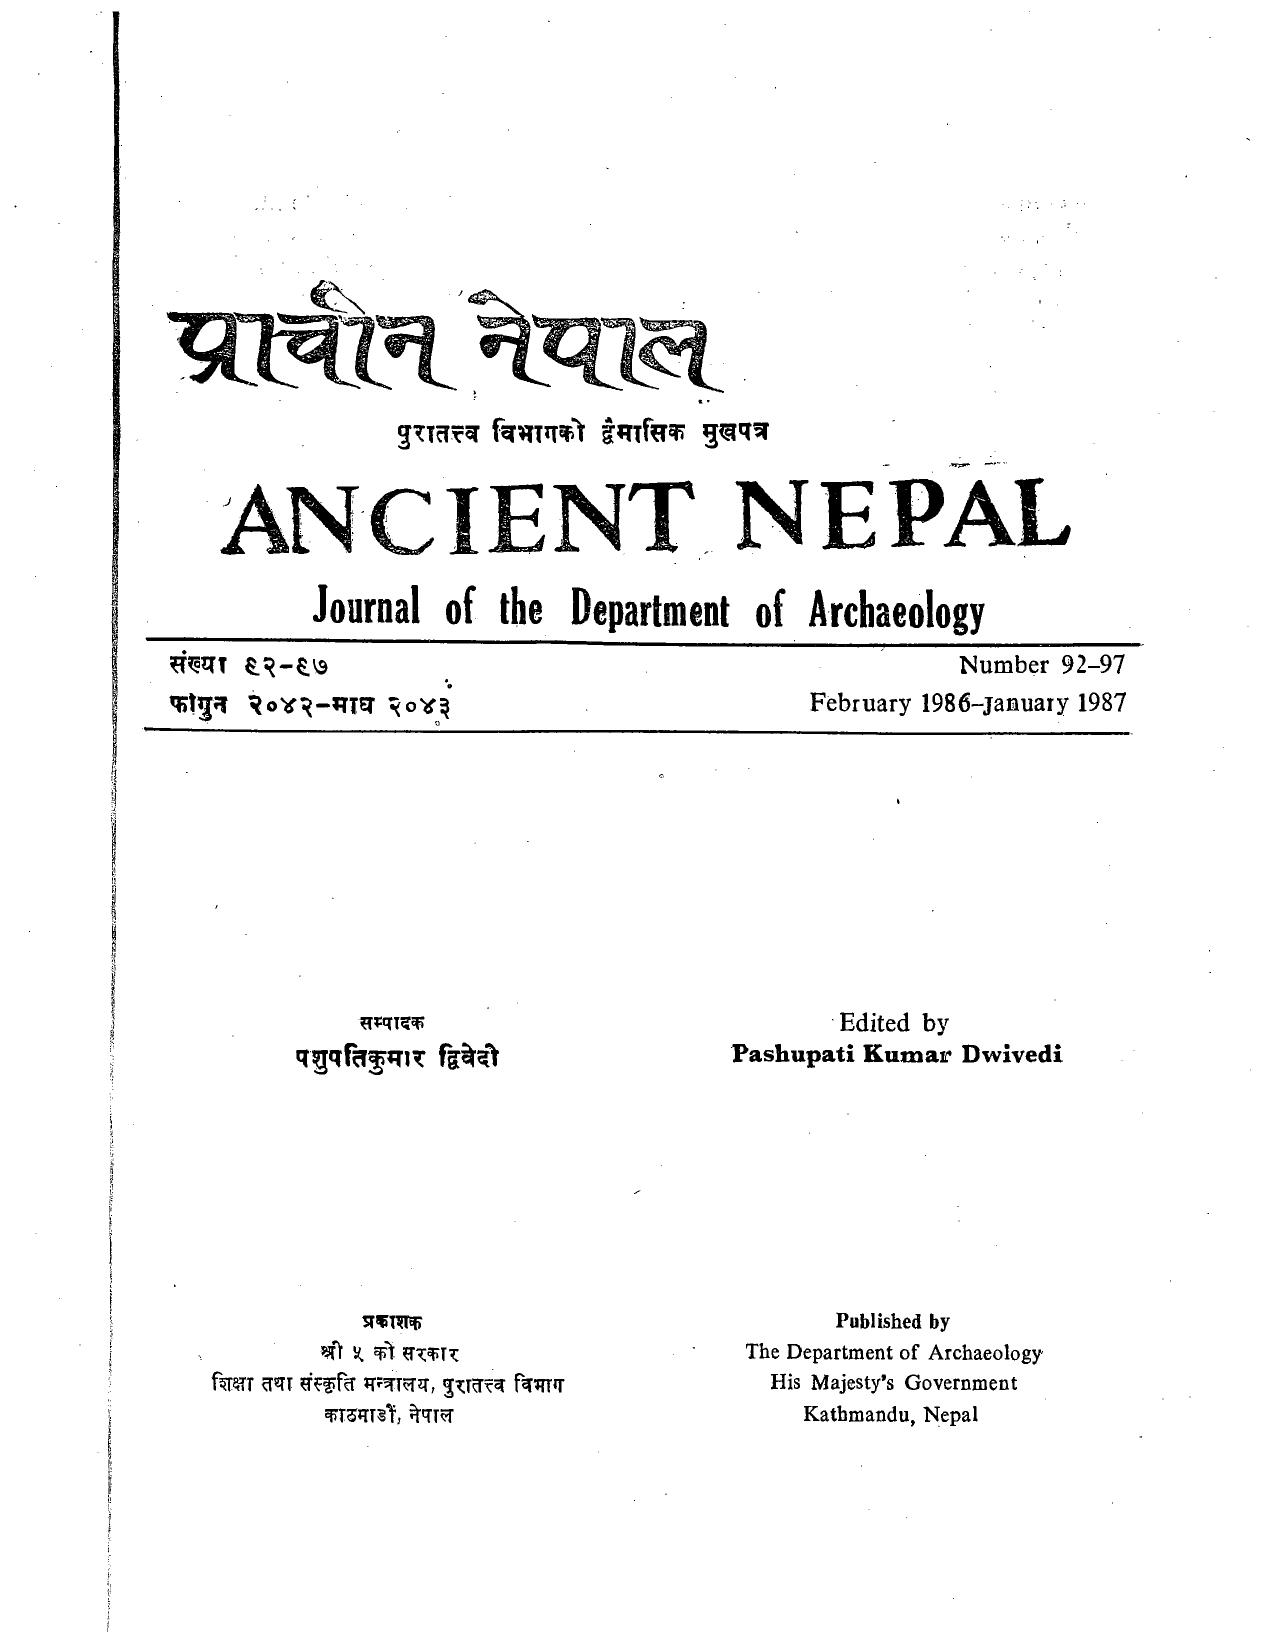 Ancient Nepal 92-97